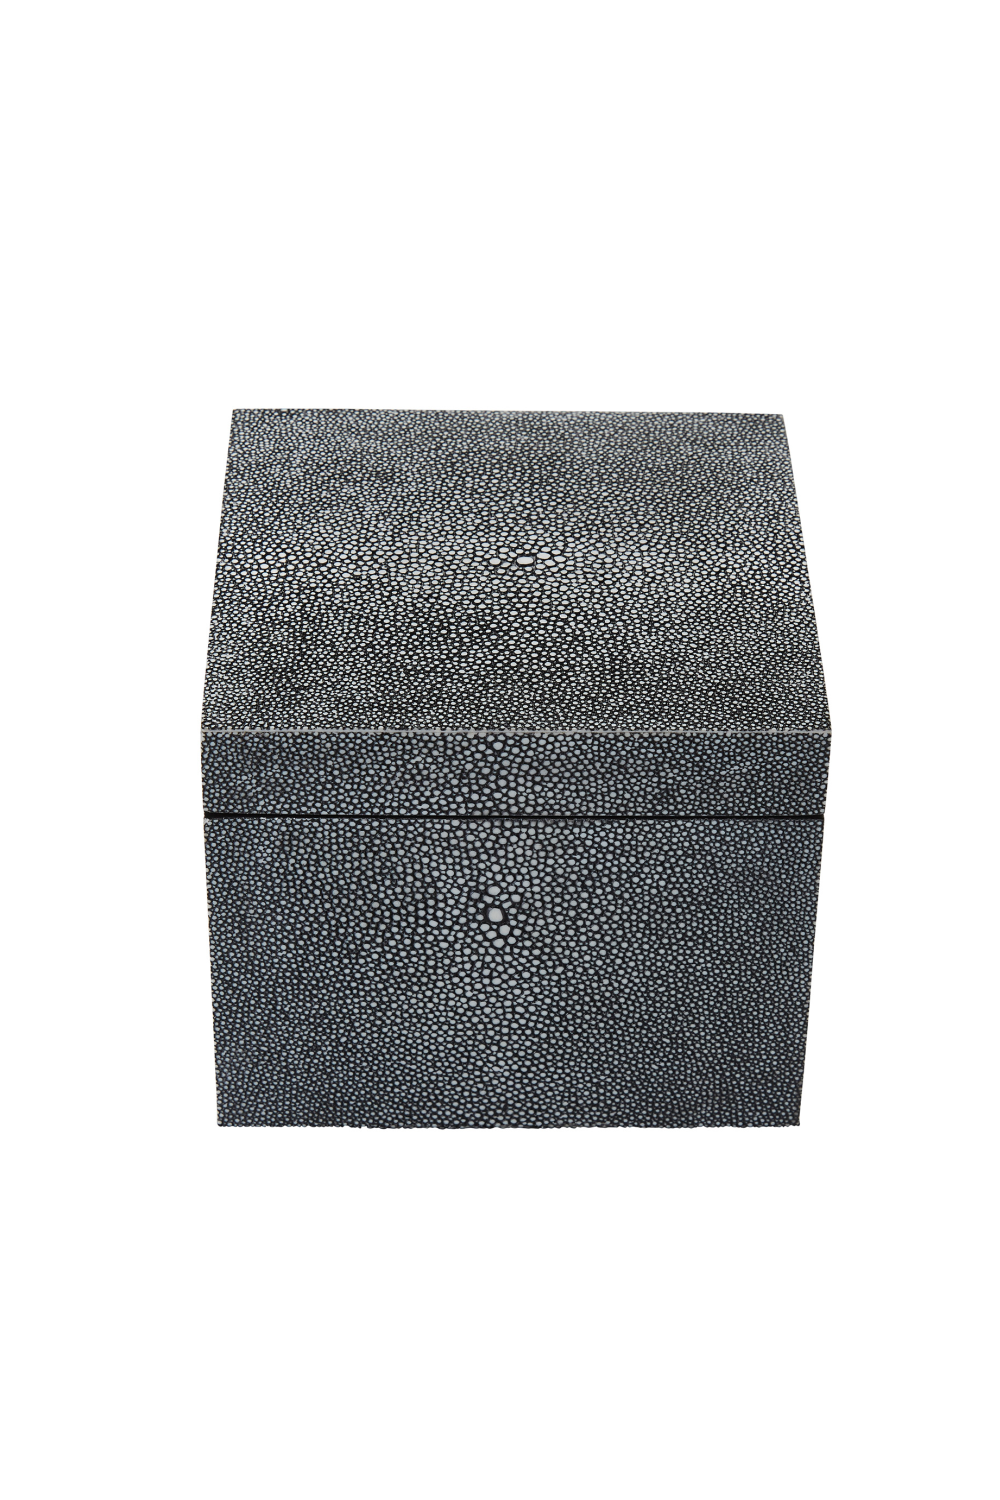 Gray Decorative Box | Andrew Martin Liza | OROA